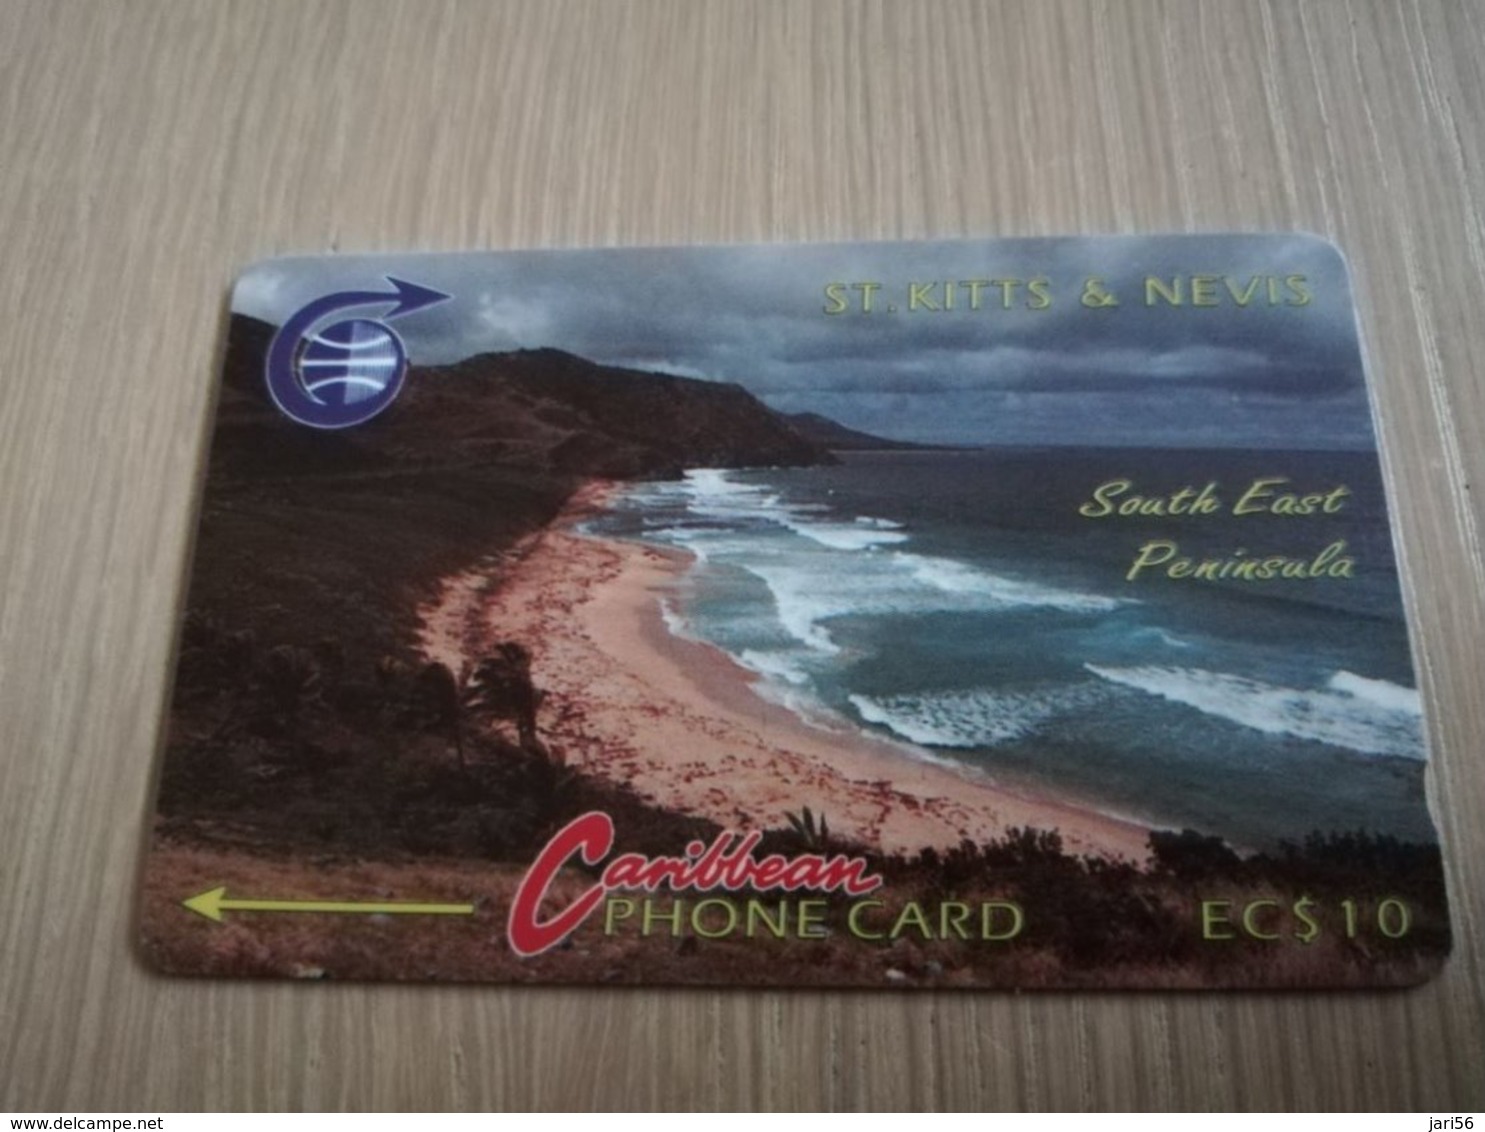 ST KITTS & NEVIS   GPT CARD $10,-   3CSK (ERROR)     NO STK-3Ba    SOUTH EAST PENINSULA     Fine Used Card  **2329** - St. Kitts & Nevis